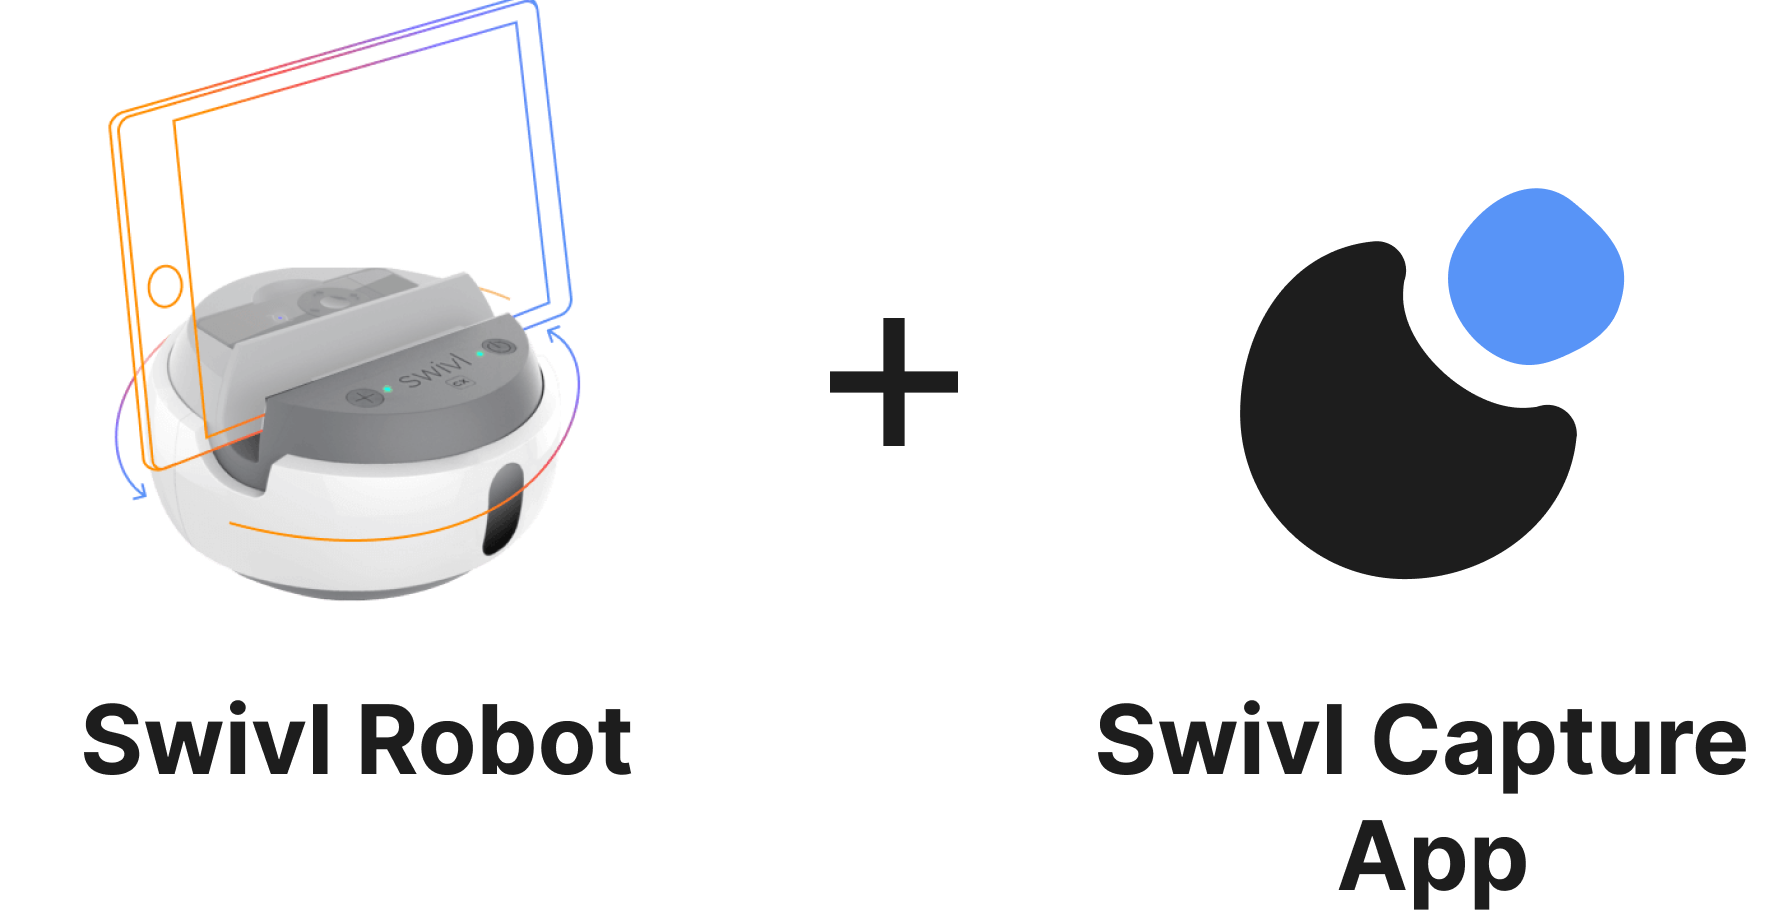 Robot and Capture app logo